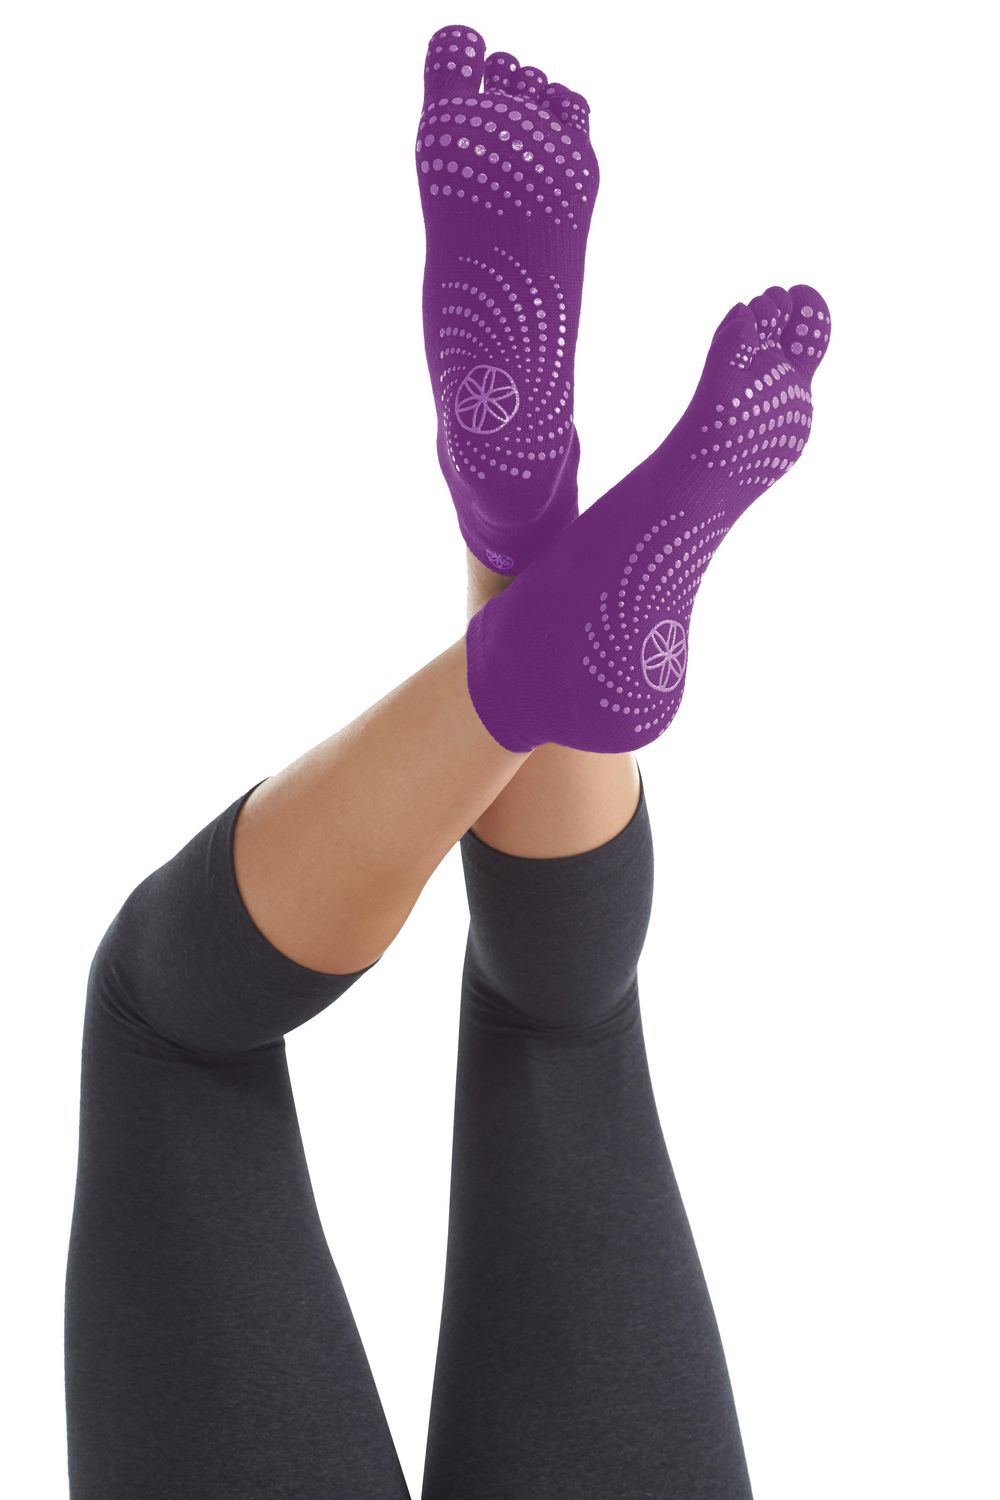 Buy Gaiam Grippy Yoga Socks S/M Sparkling Grape at